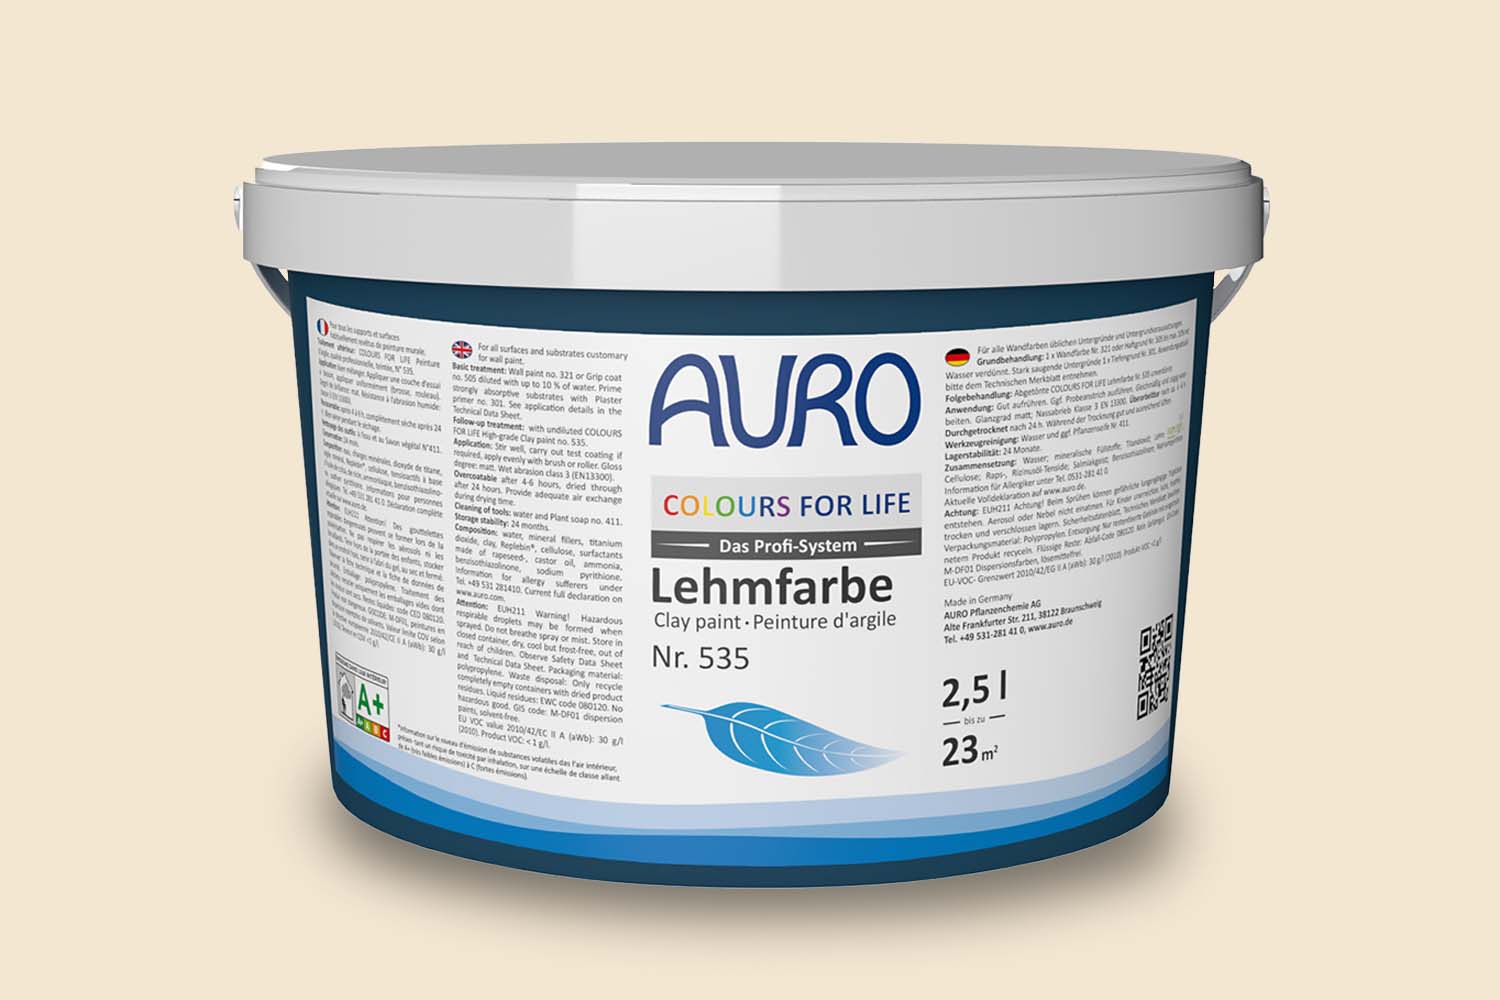 Auro Profi-Lehmfarbe Nr. 535 buttercake Colours For Life